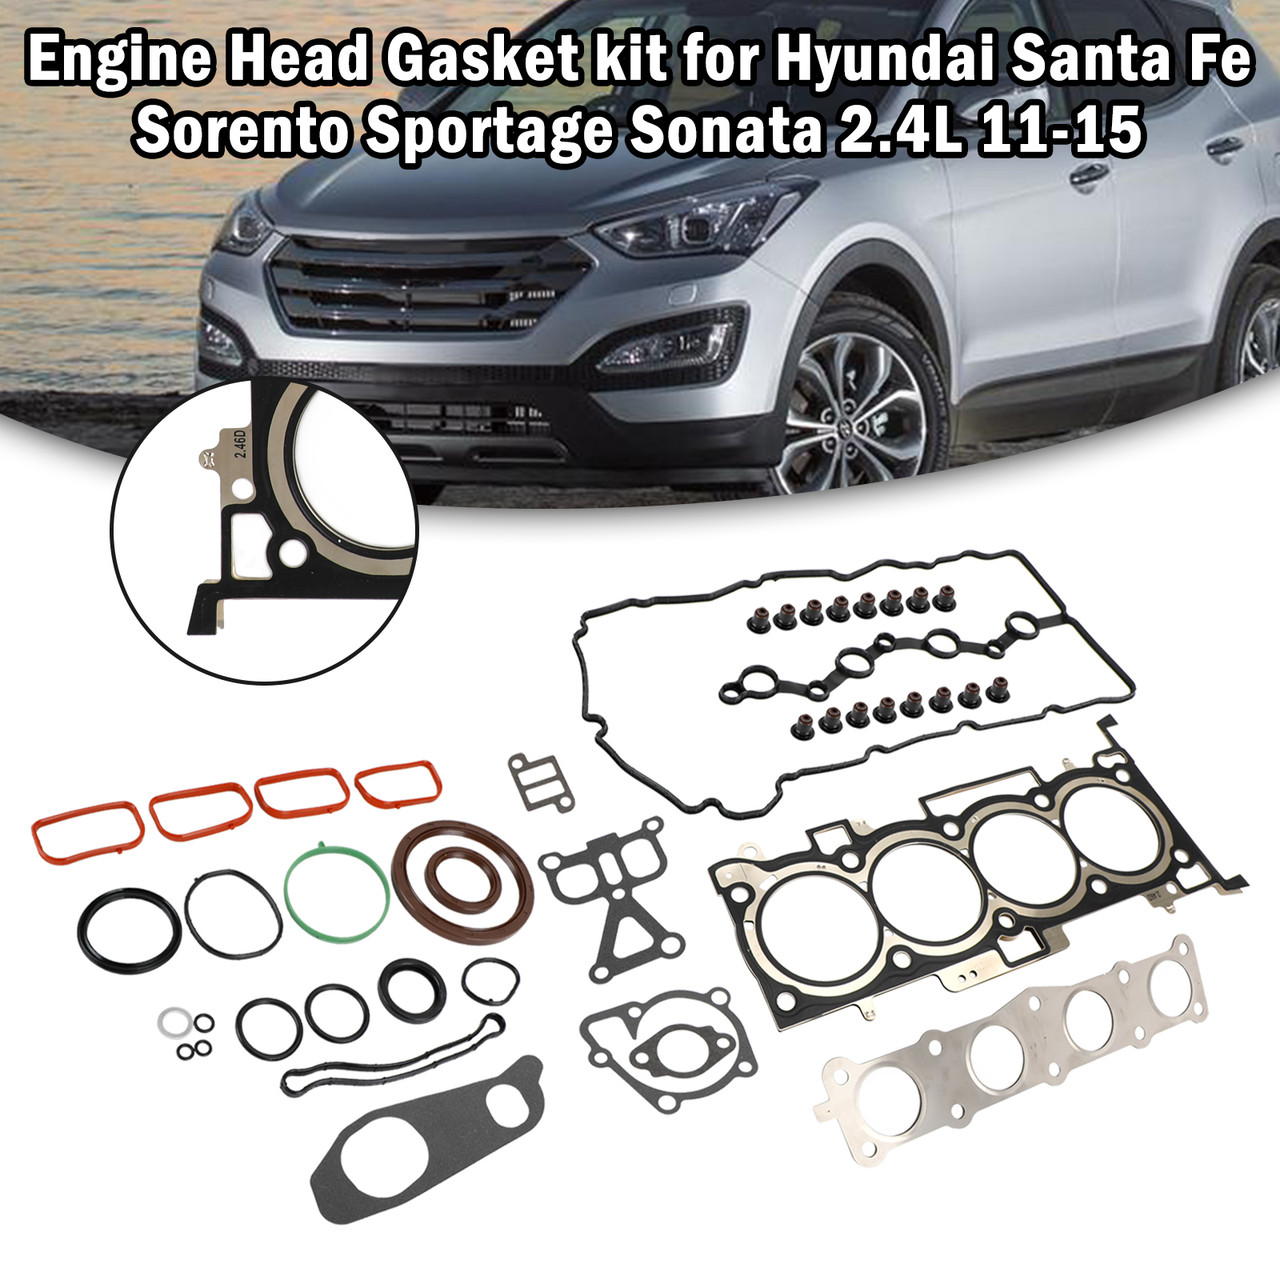 Engine Head Gasket kit Hyundai Santa Fe Sorento Sportage Sonata 2.4L 11-15